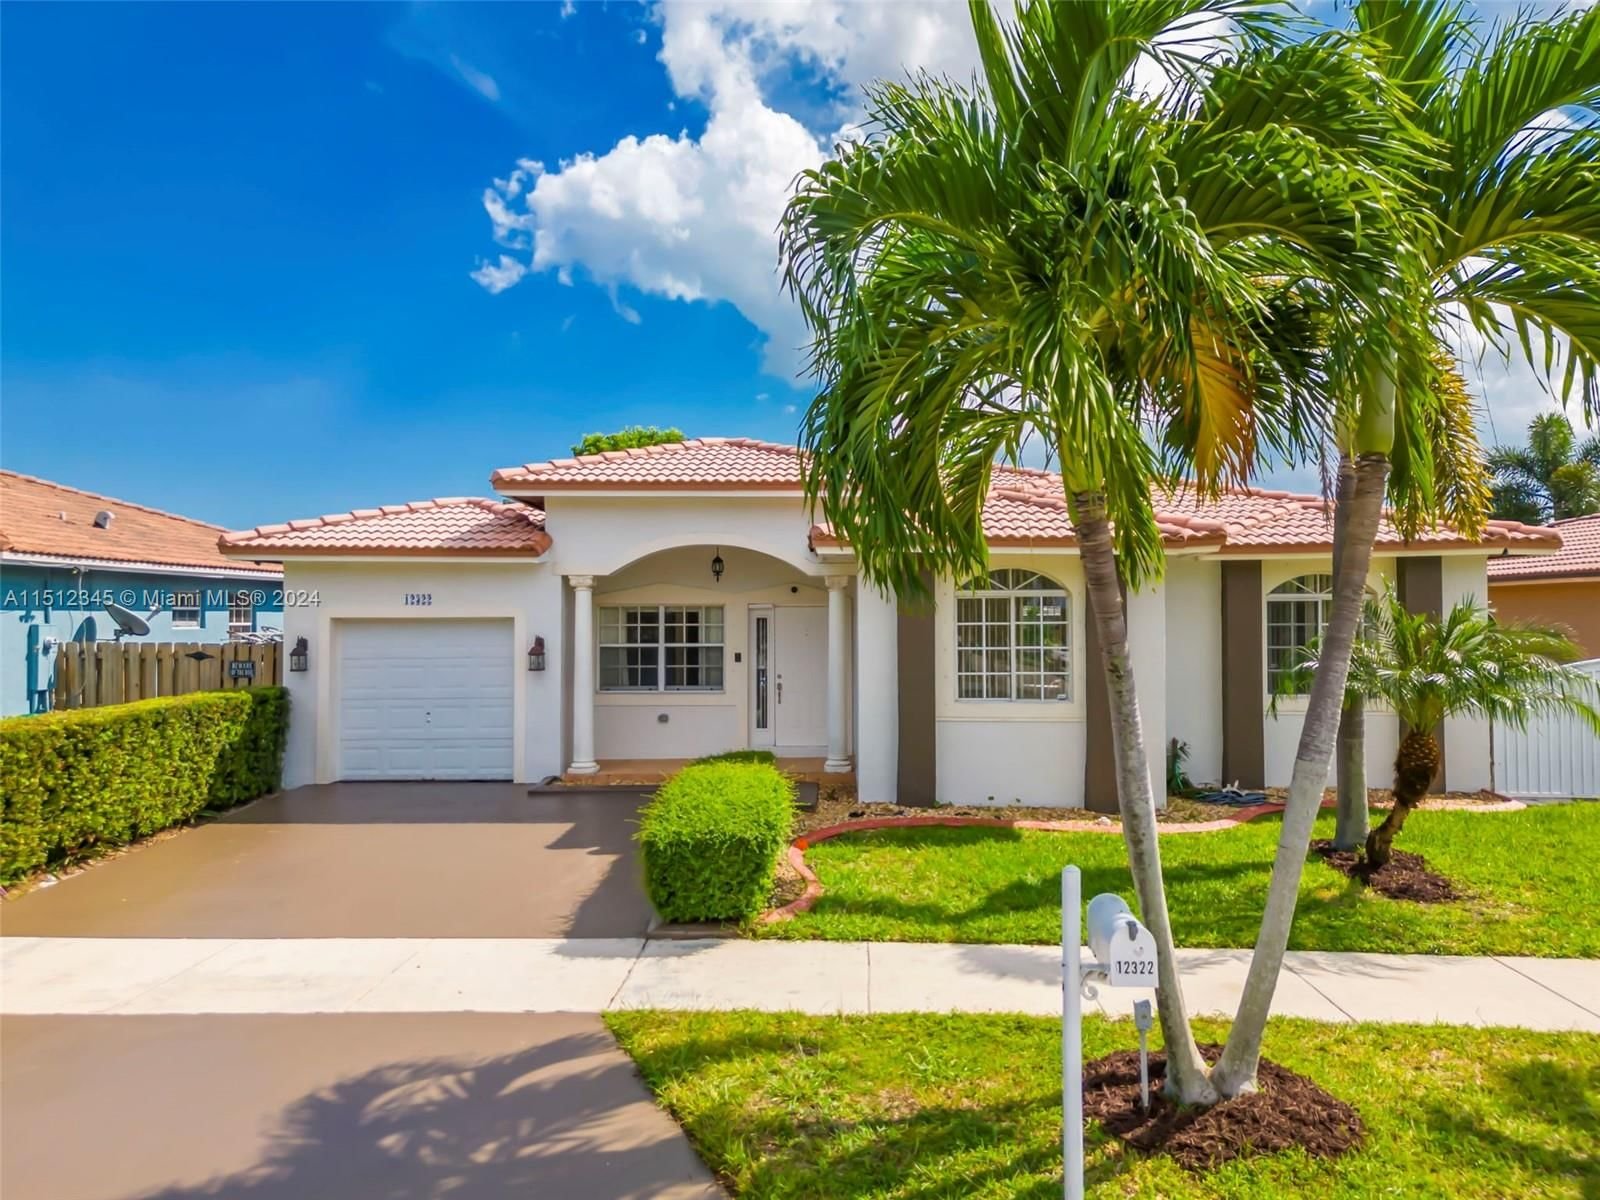 Real estate property located at 12322 213th Ter, Miami-Dade County, JESSLYN SUBDIVISION, Miami, FL